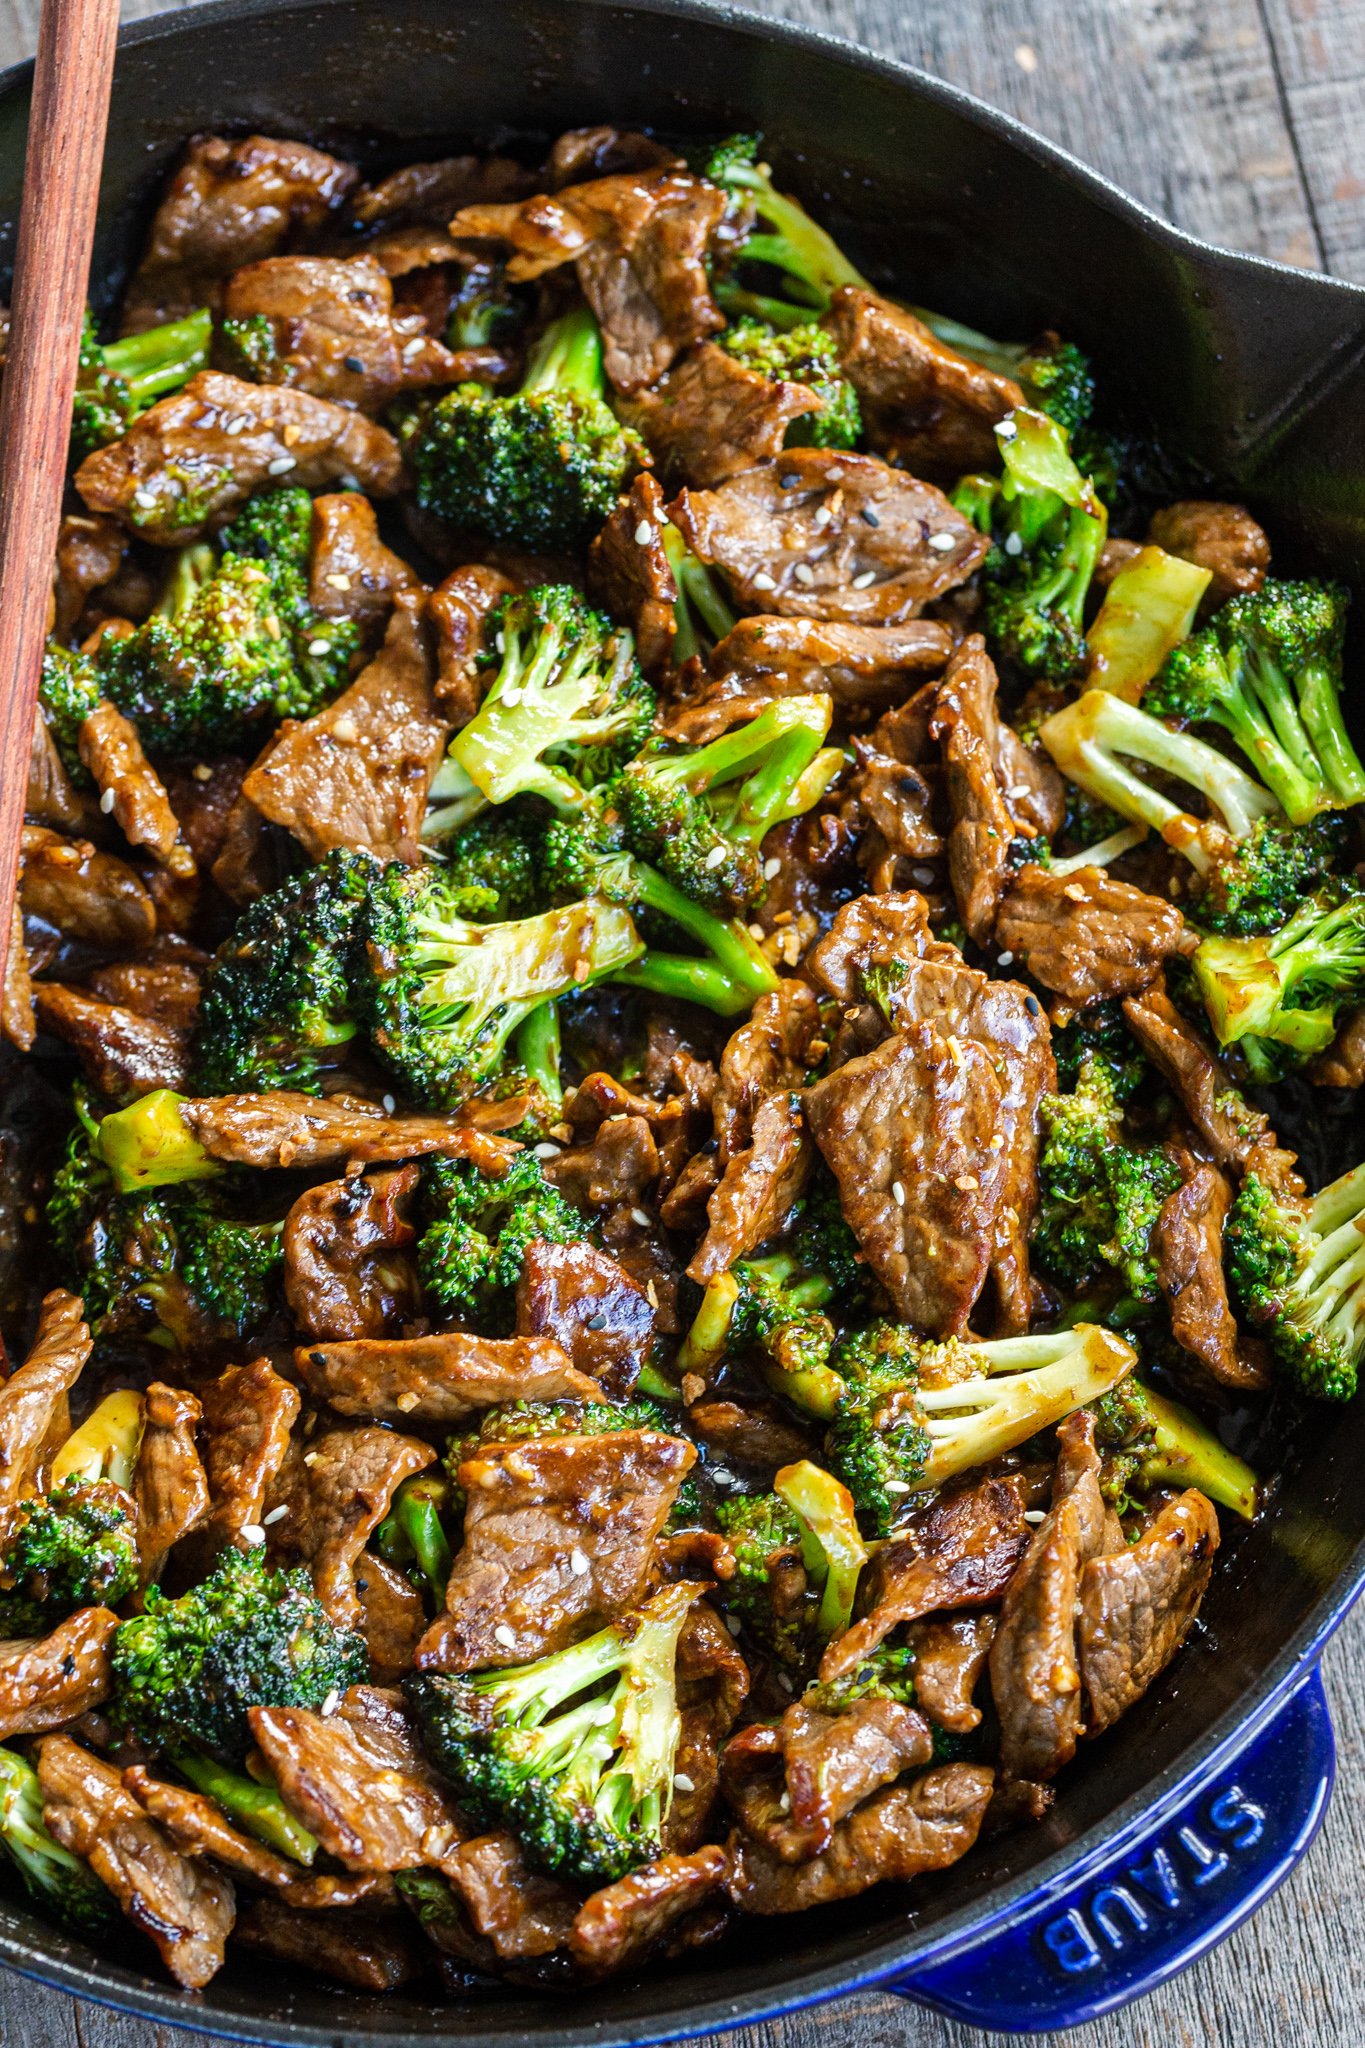 https://cdn.momsdish.com/wp-content/uploads/2014/10/One-Pot-Beef-Broccoli-Recipe-11.jpg